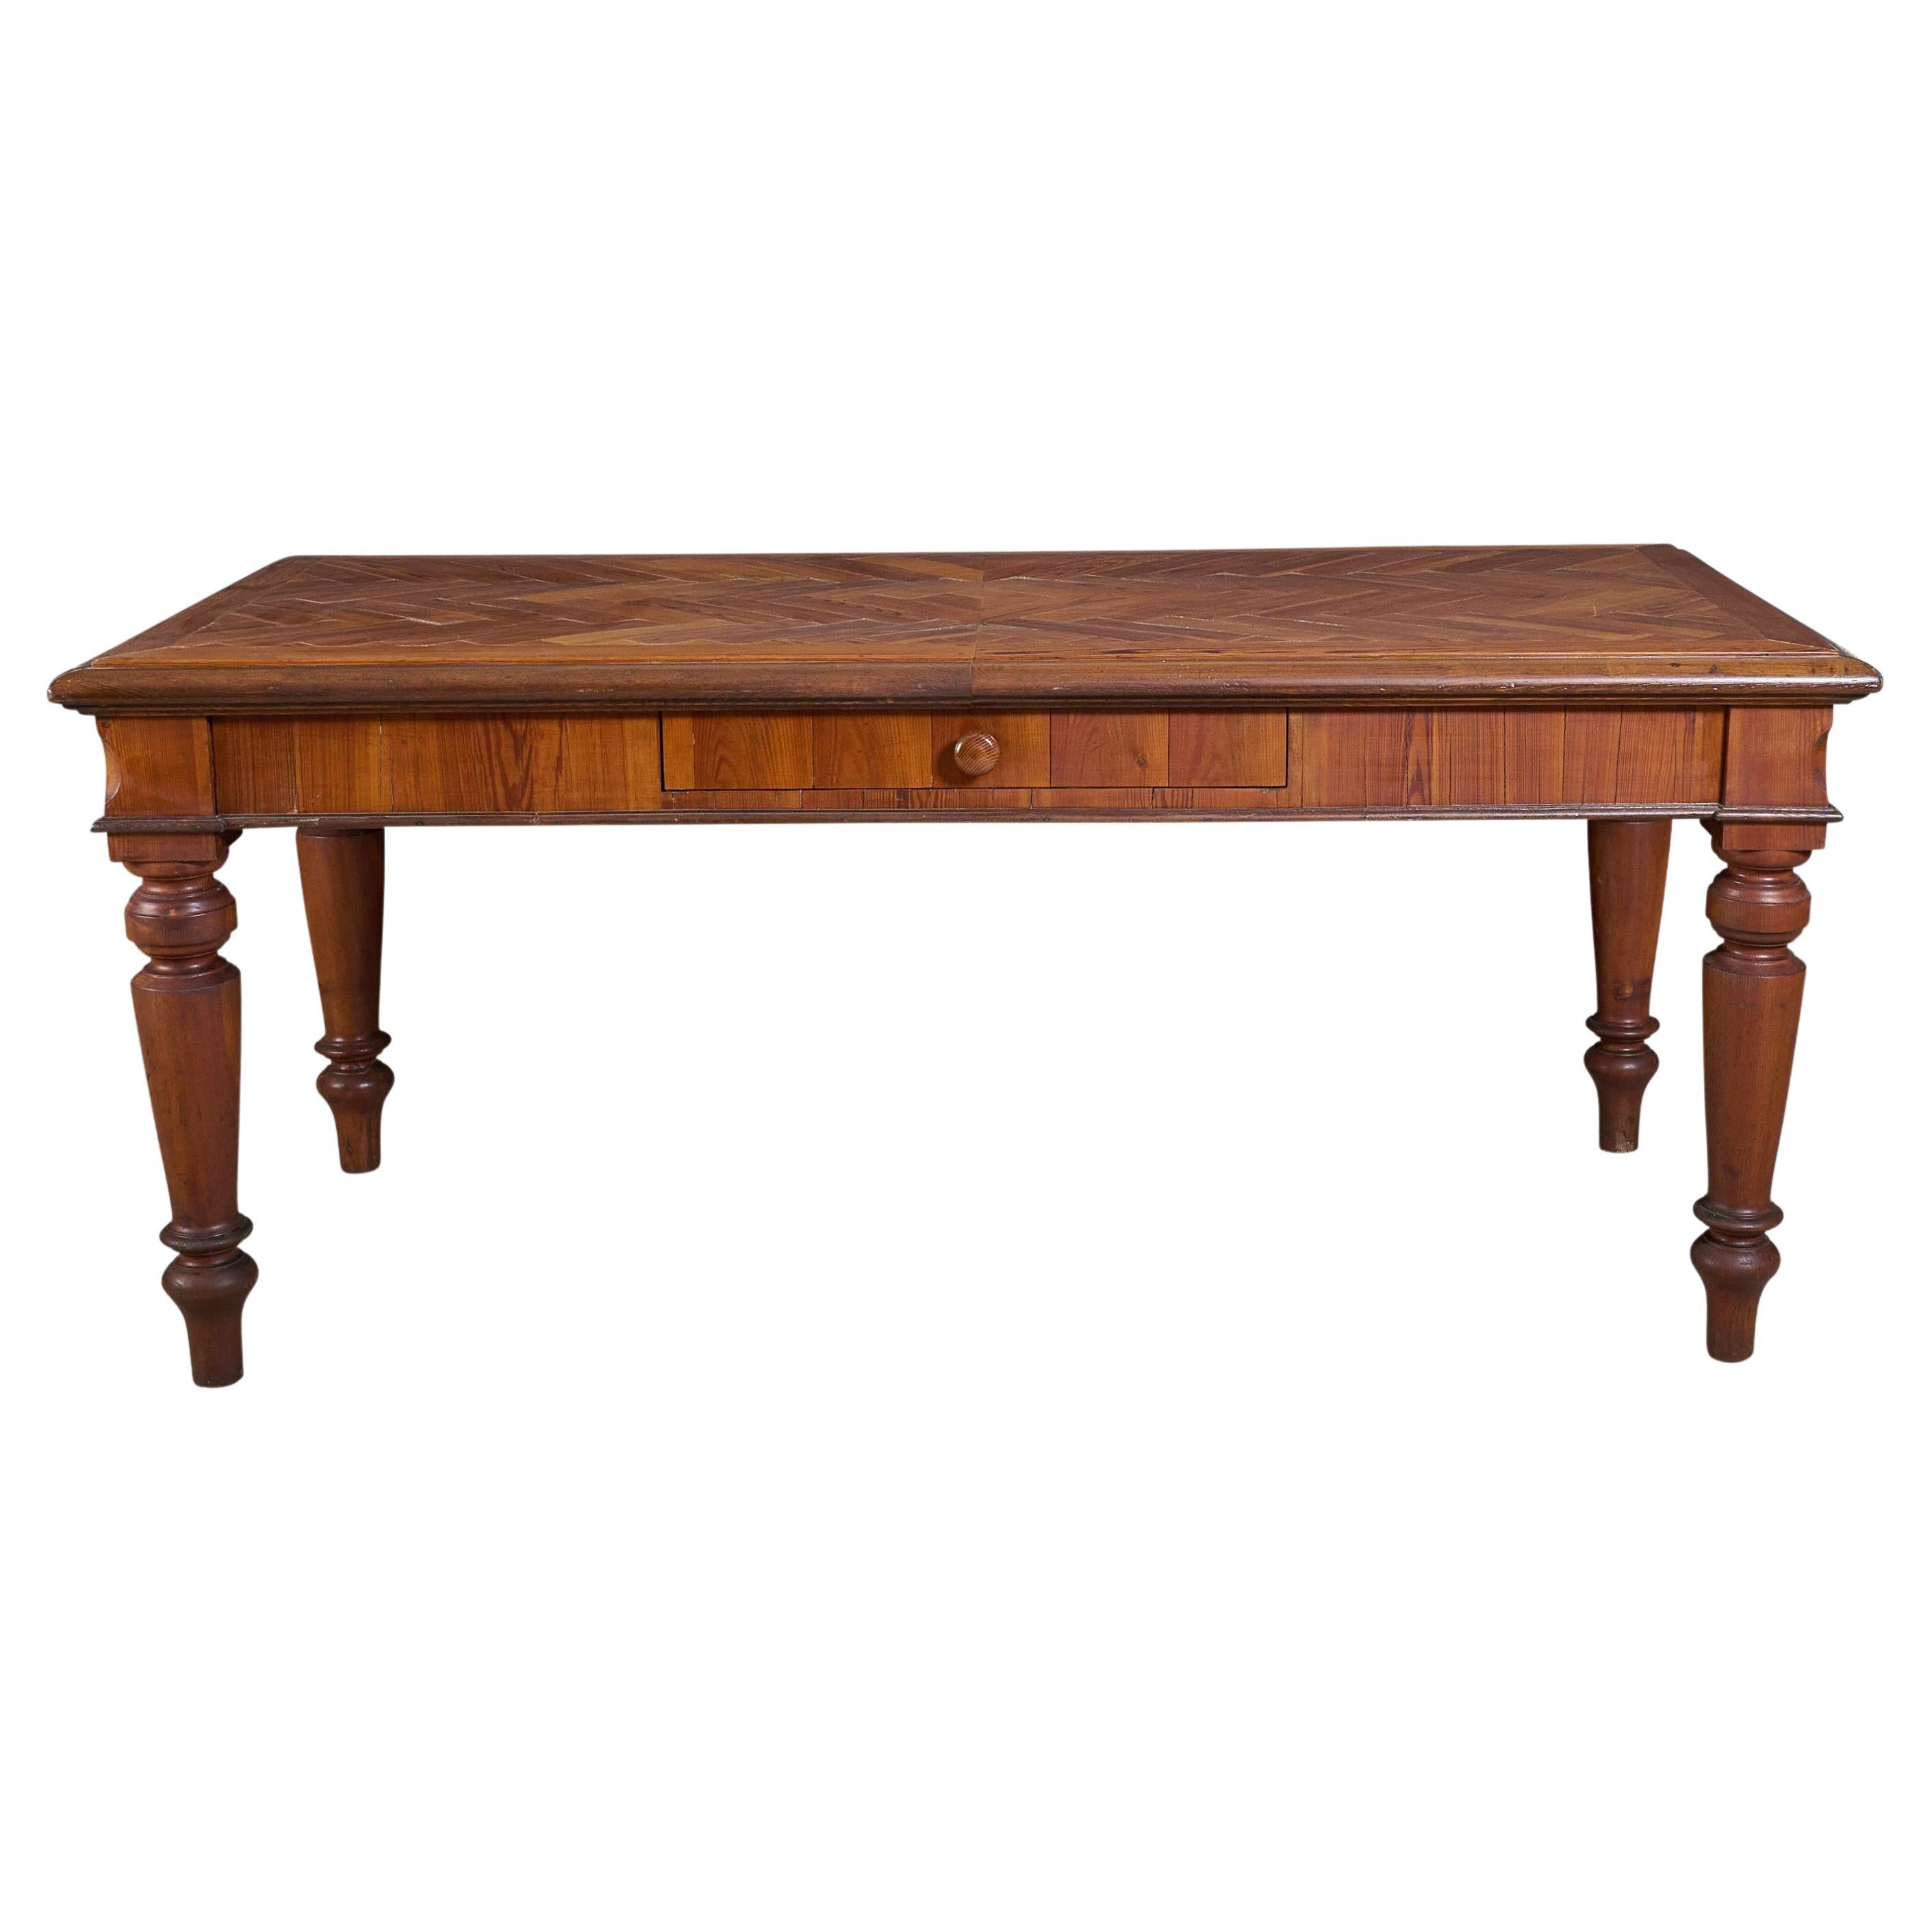 Table/Desk with Herringbone Design